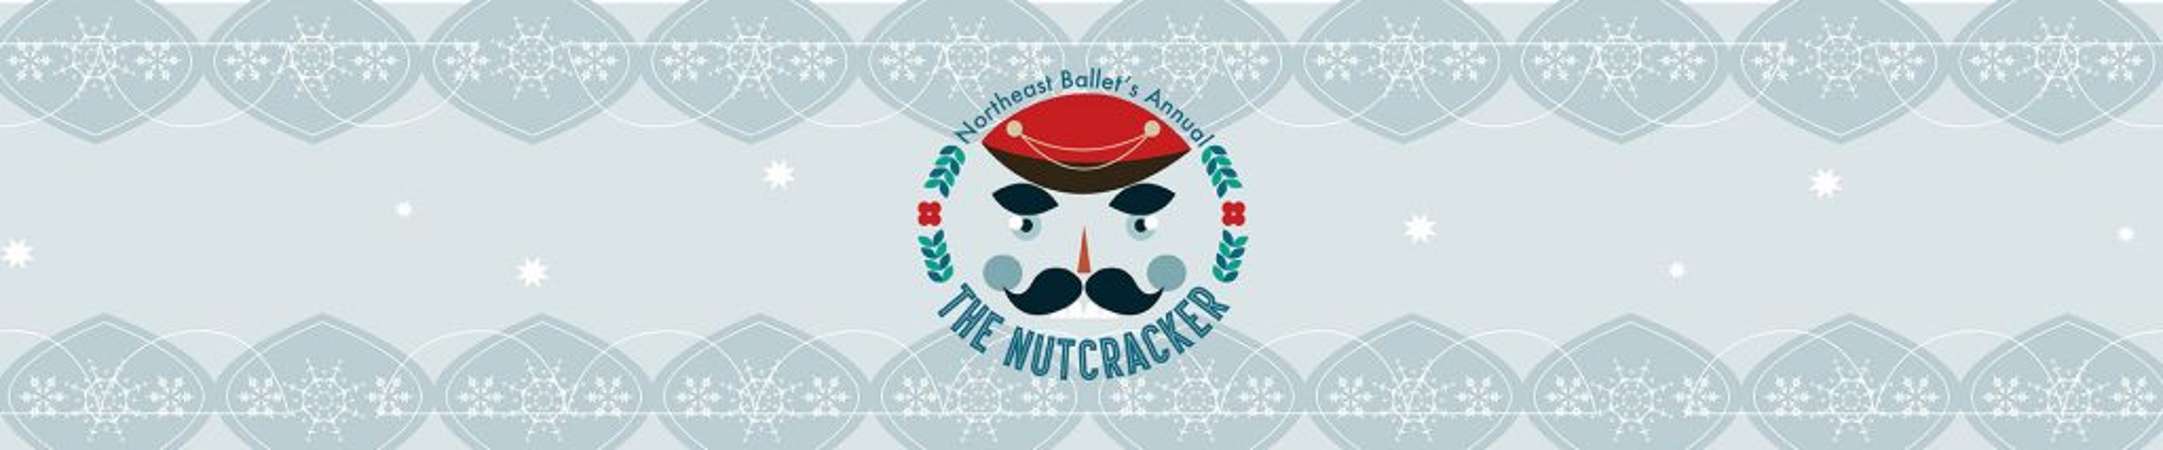 Nutcracker poster